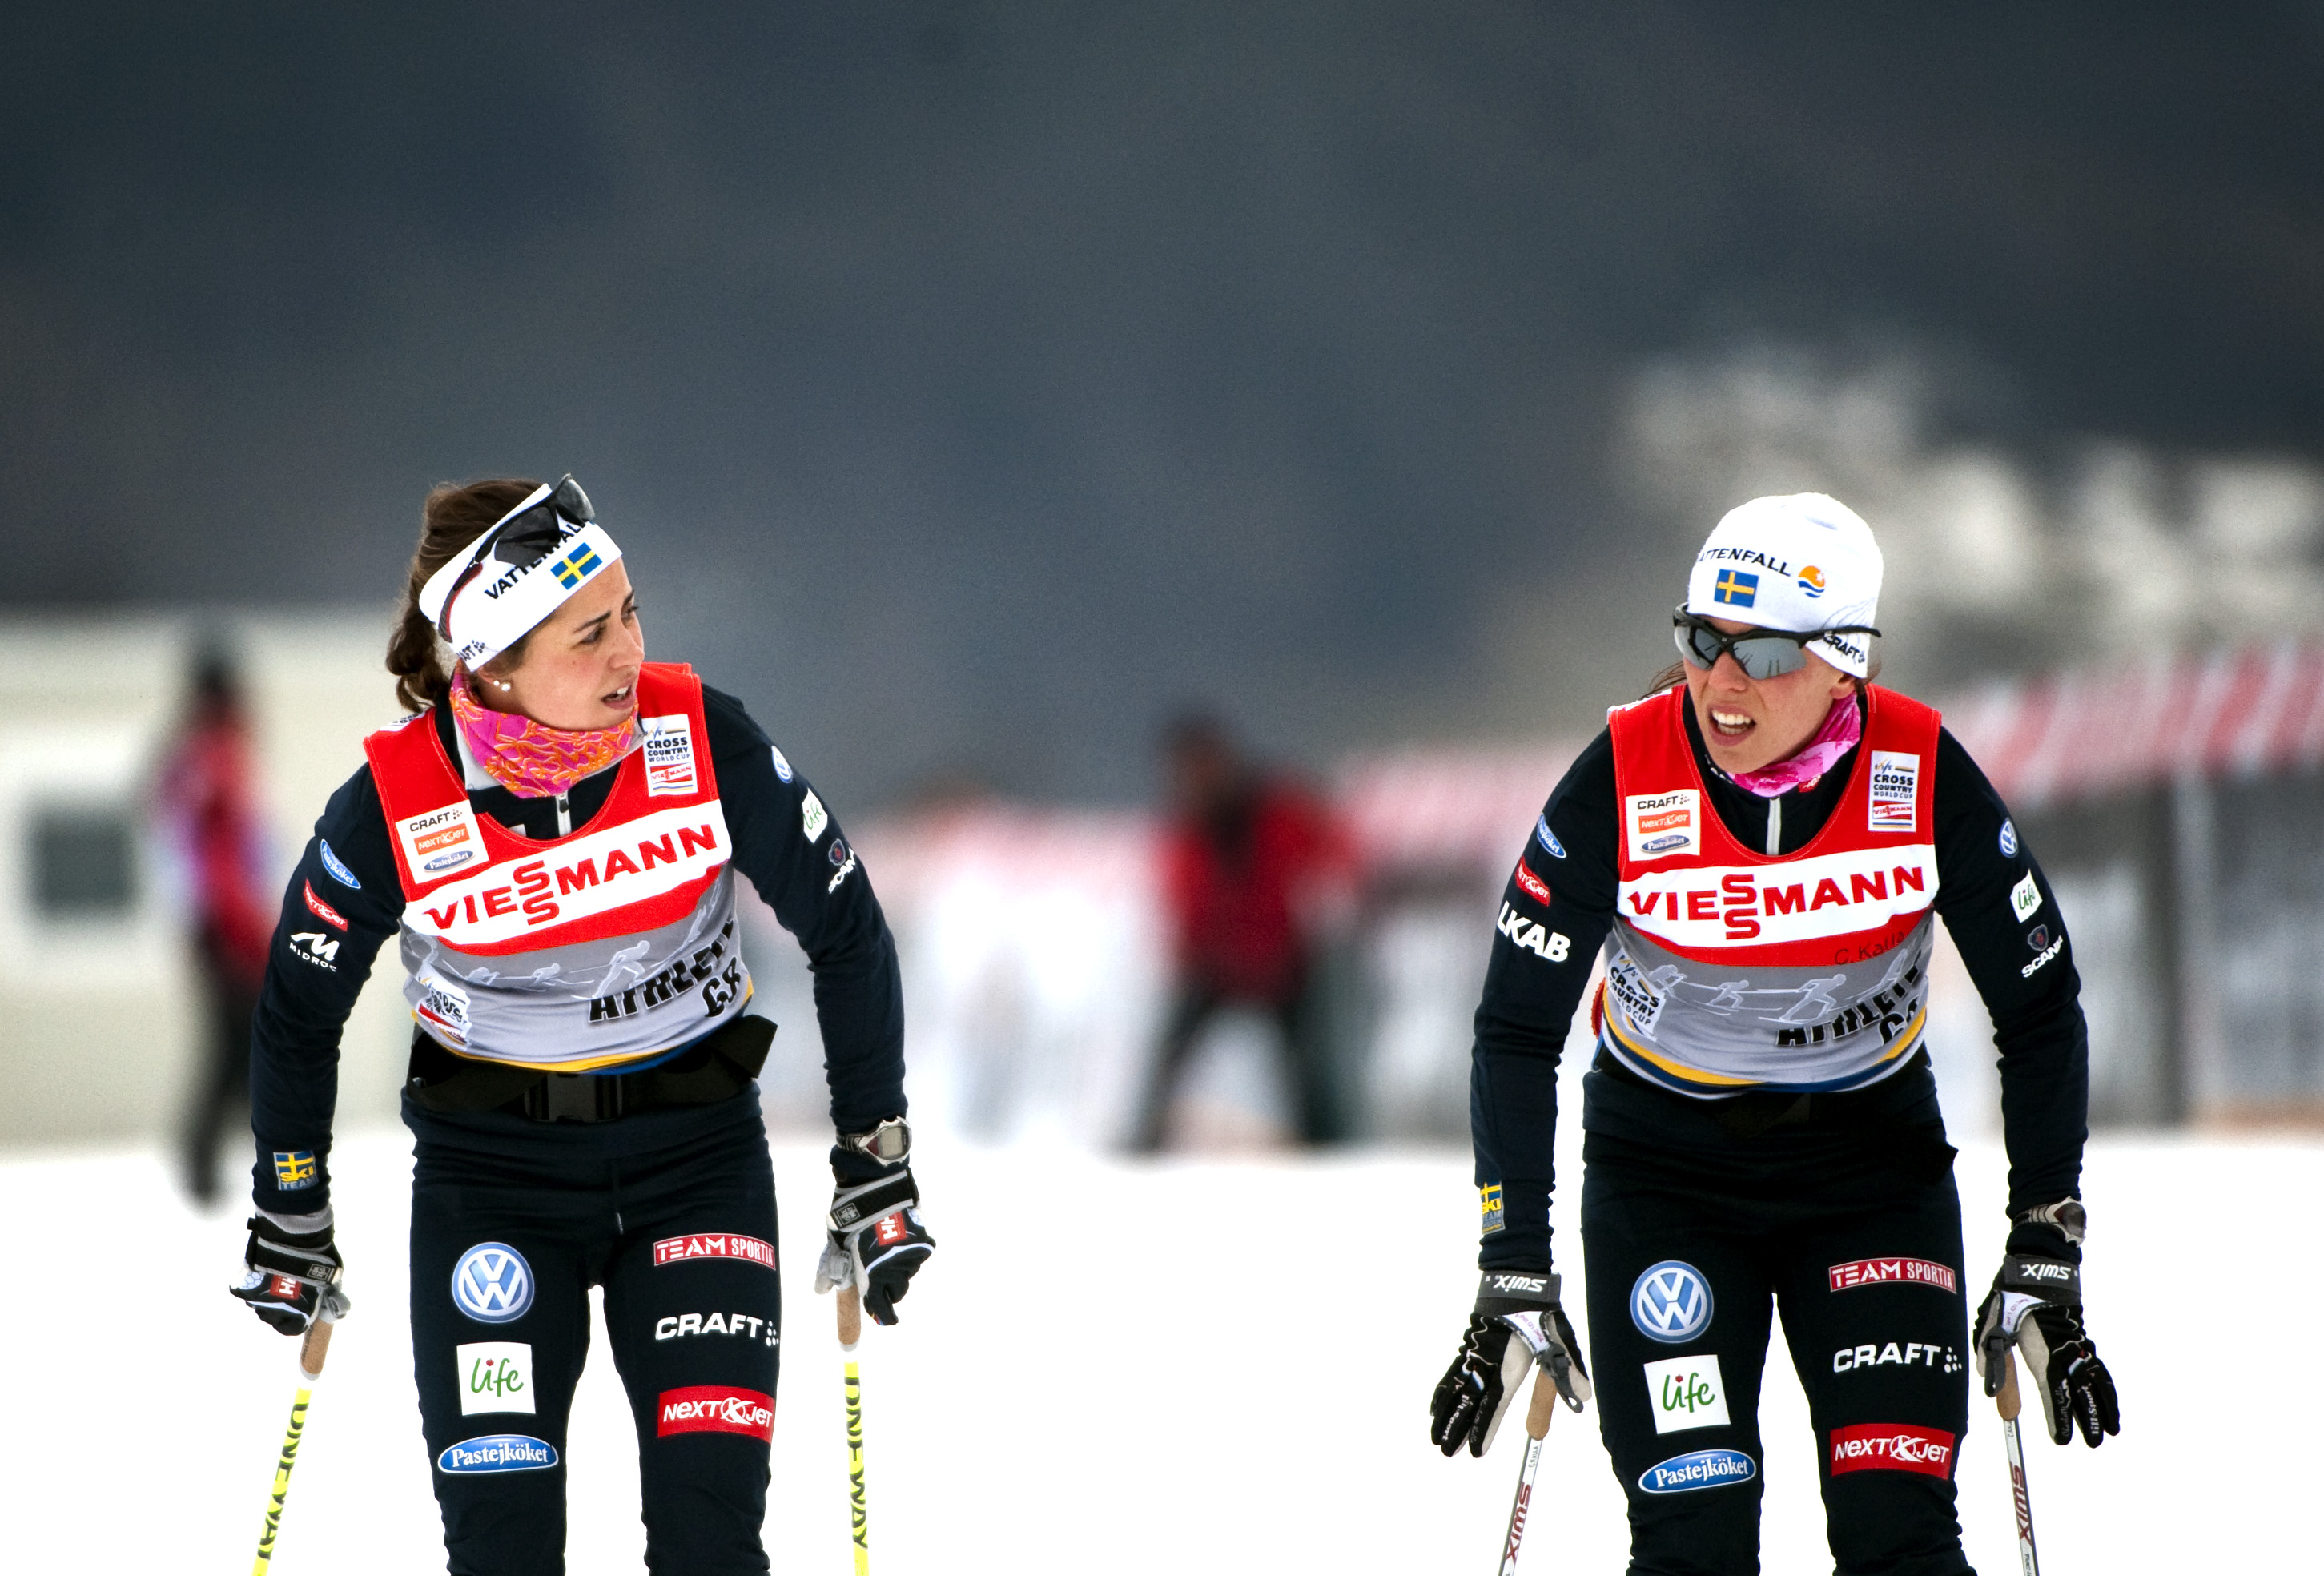 Anna Haag, Langdskidakning, Charlotte Kalla, skidor, Tour de Ski